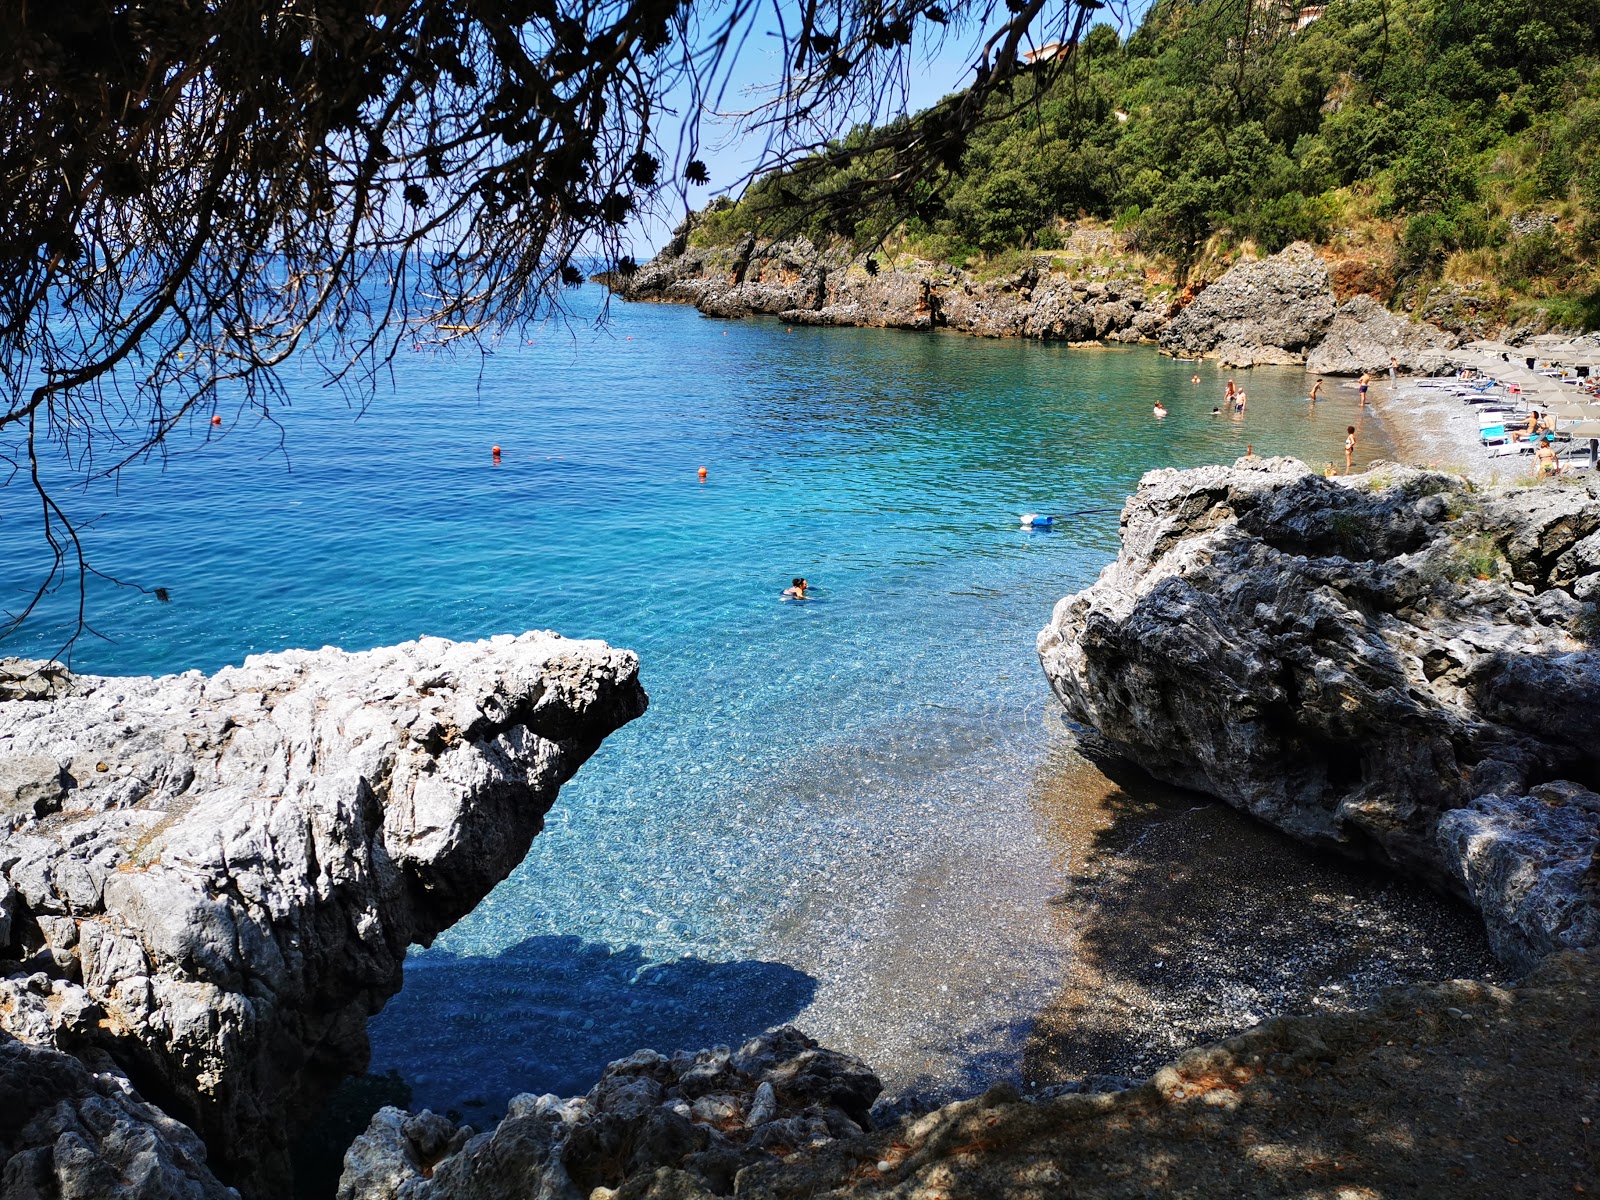 Photo of Spiaggia Portacquafridda with gray fine pebble surface